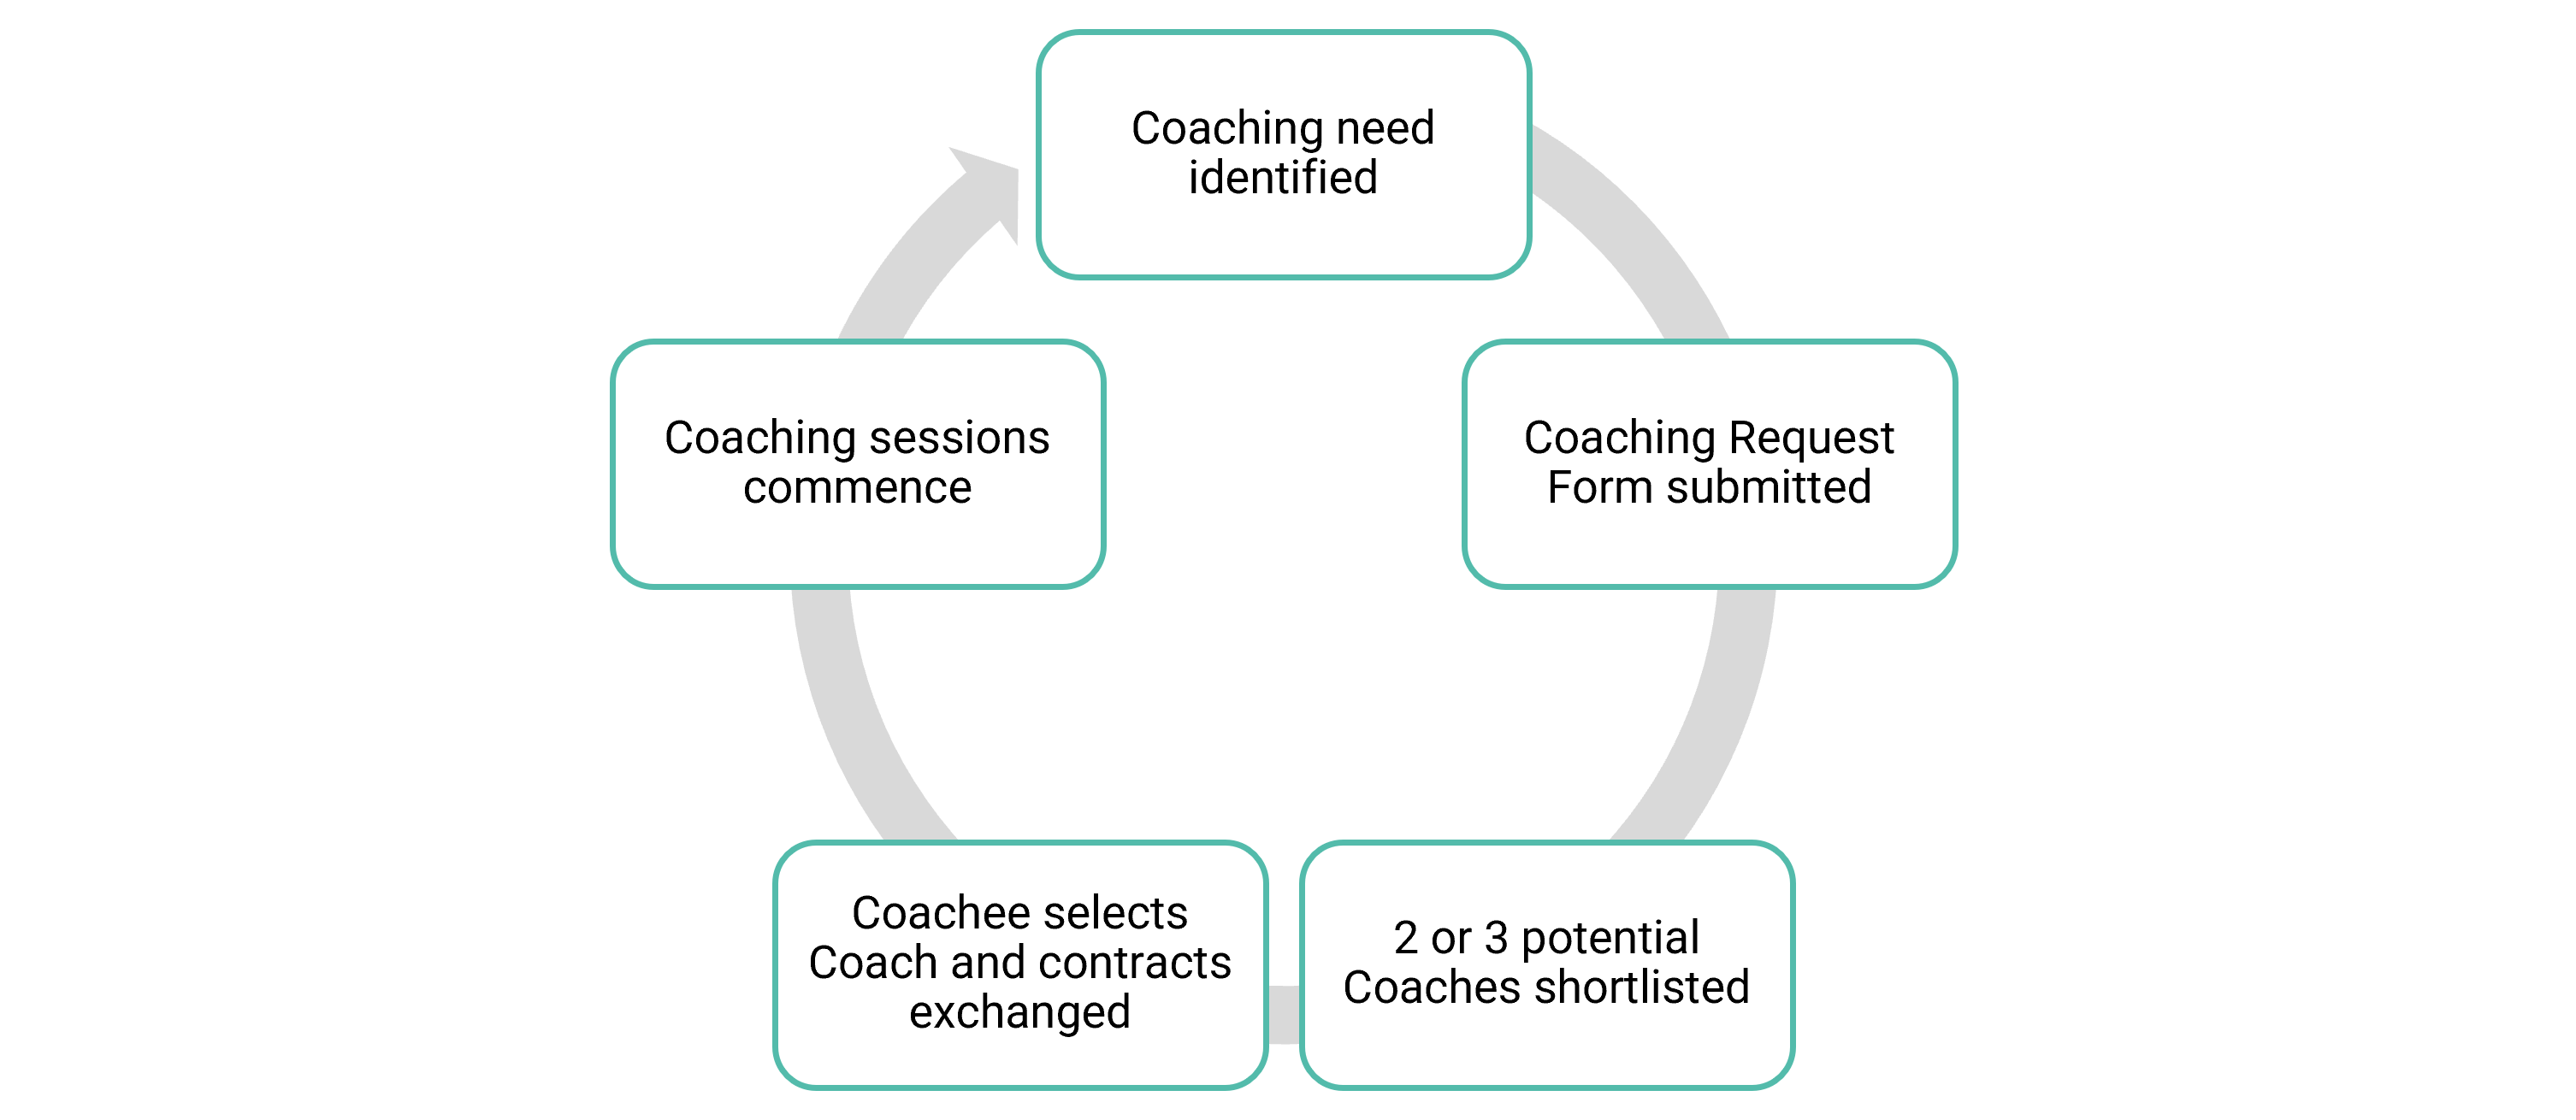 CTM's Coaching Pathway